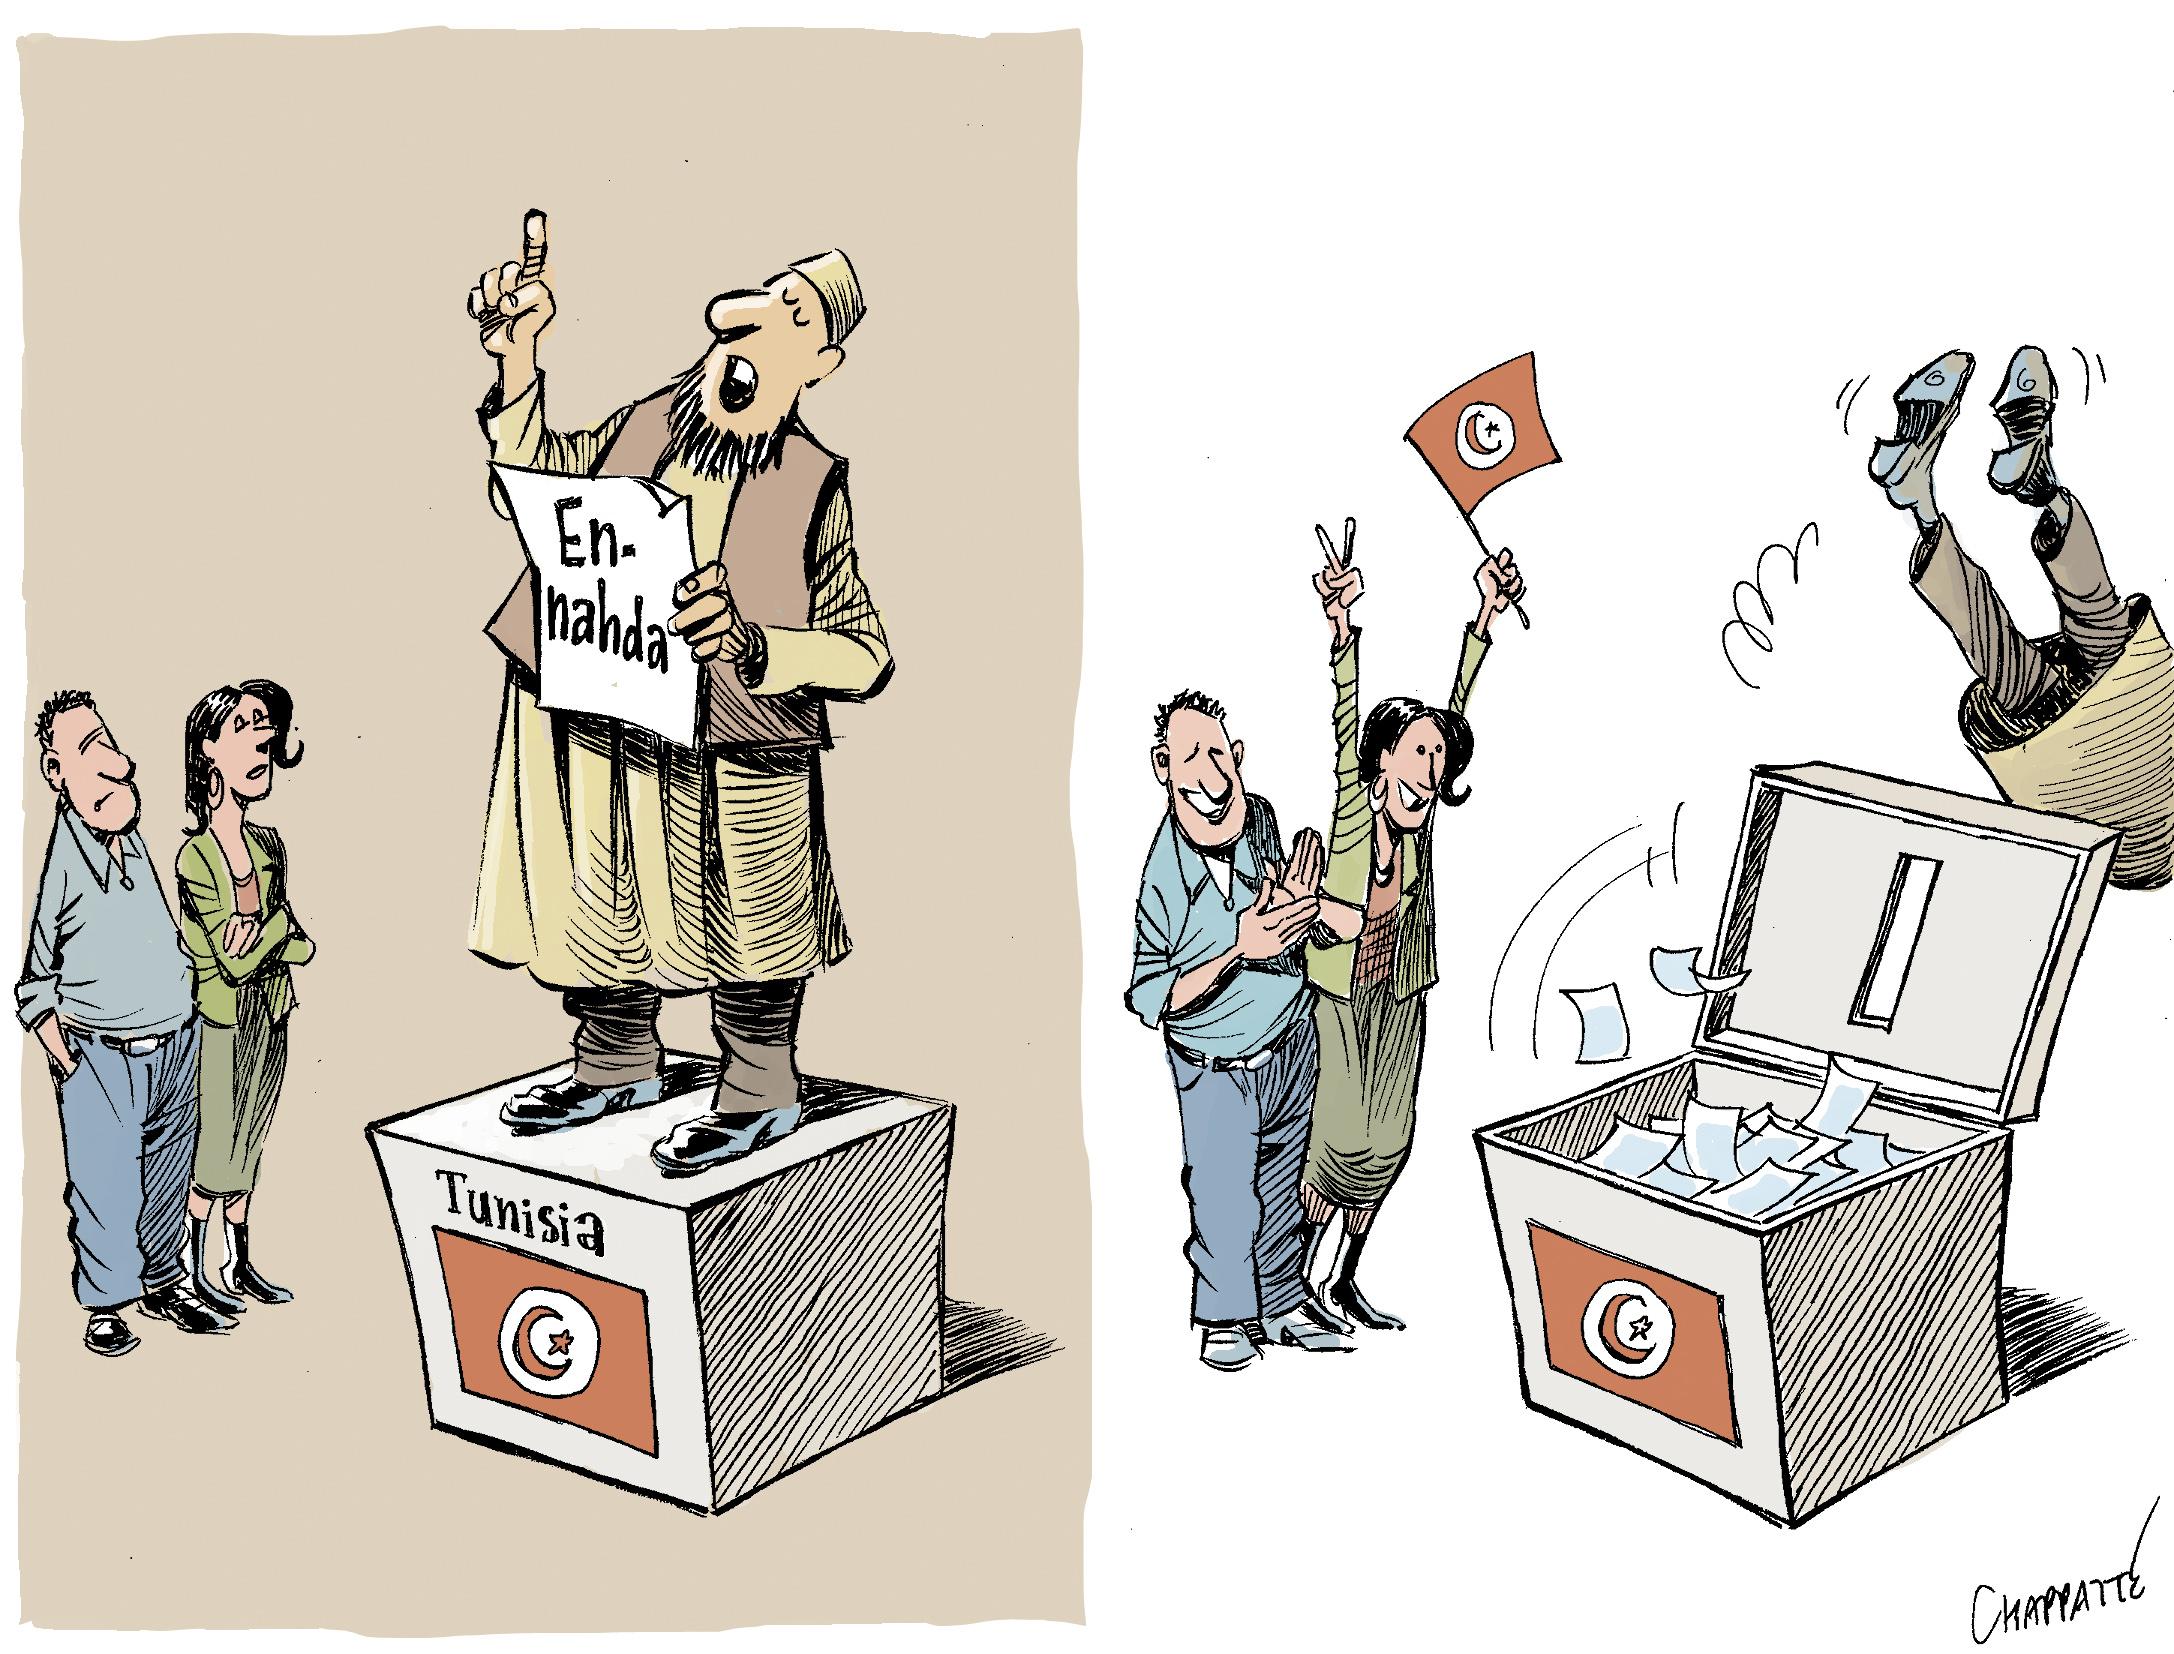 Tunisia's islamist party loses